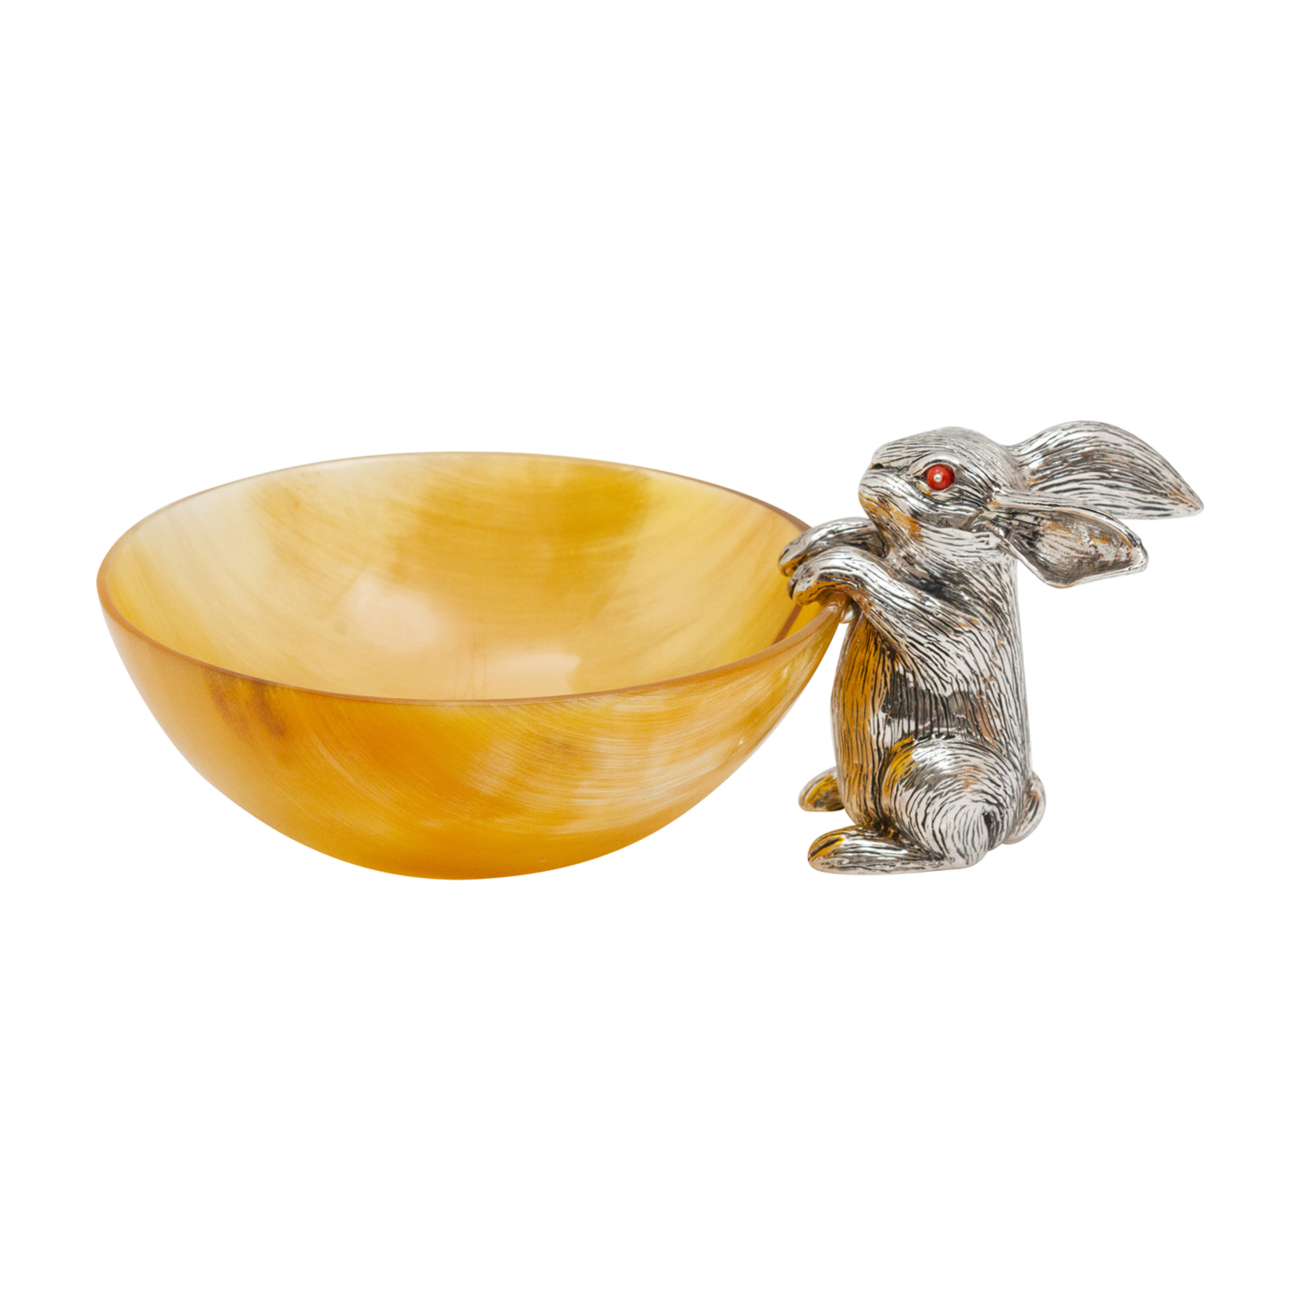 Buffalo Horn Bowl with Silver Rabbit